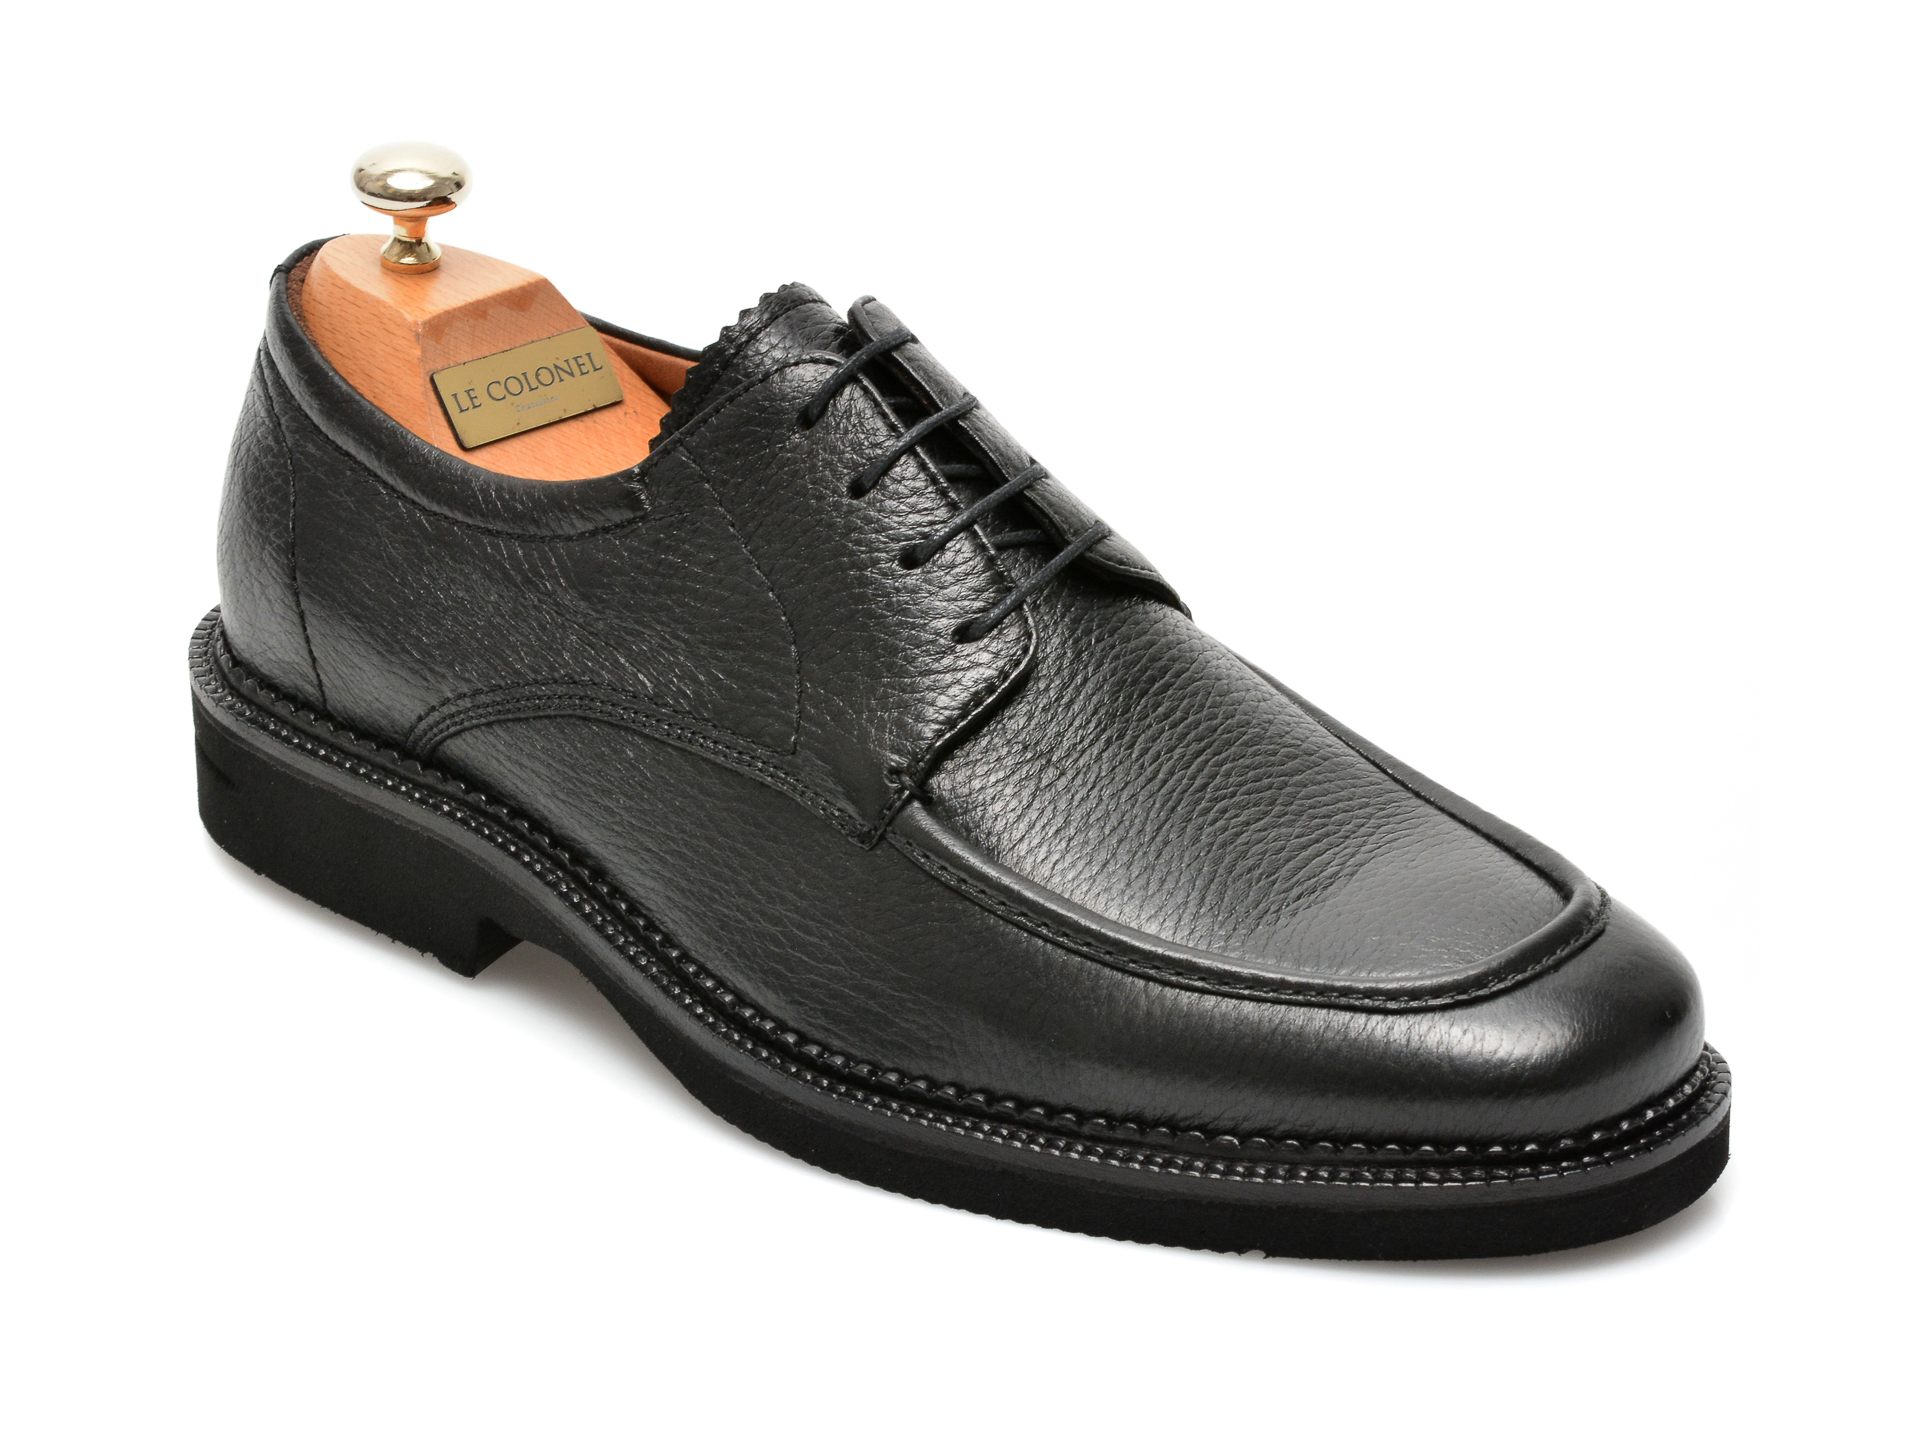 Pantofi LE COLONEL negri, 63501, din piele naturala Le Colonel imagine 2022 13clothing.ro